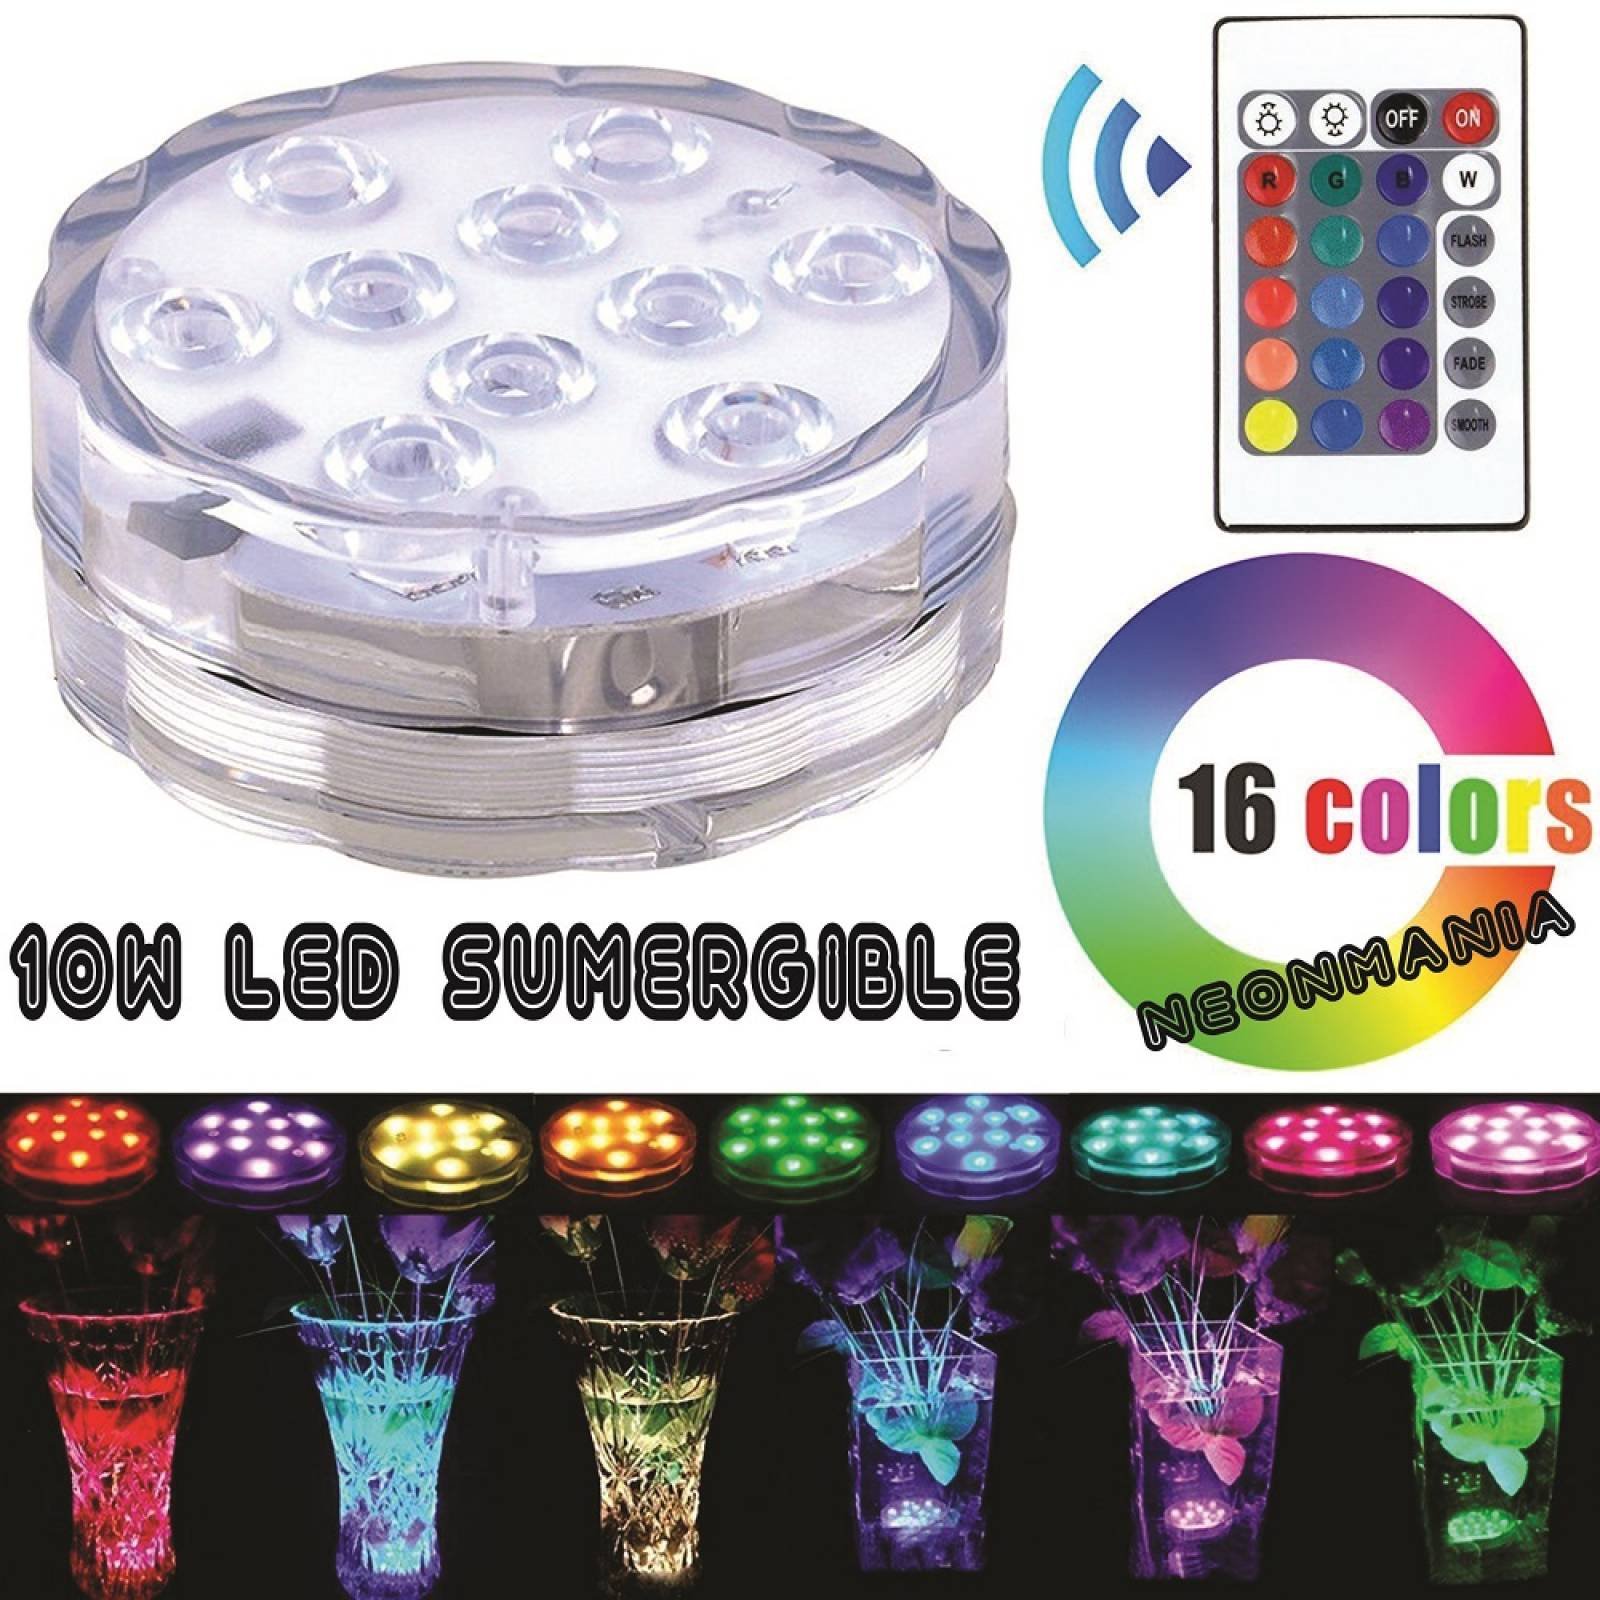 Base Lampara RGB 10 Led Sumergible Control Remoto Decoracion 